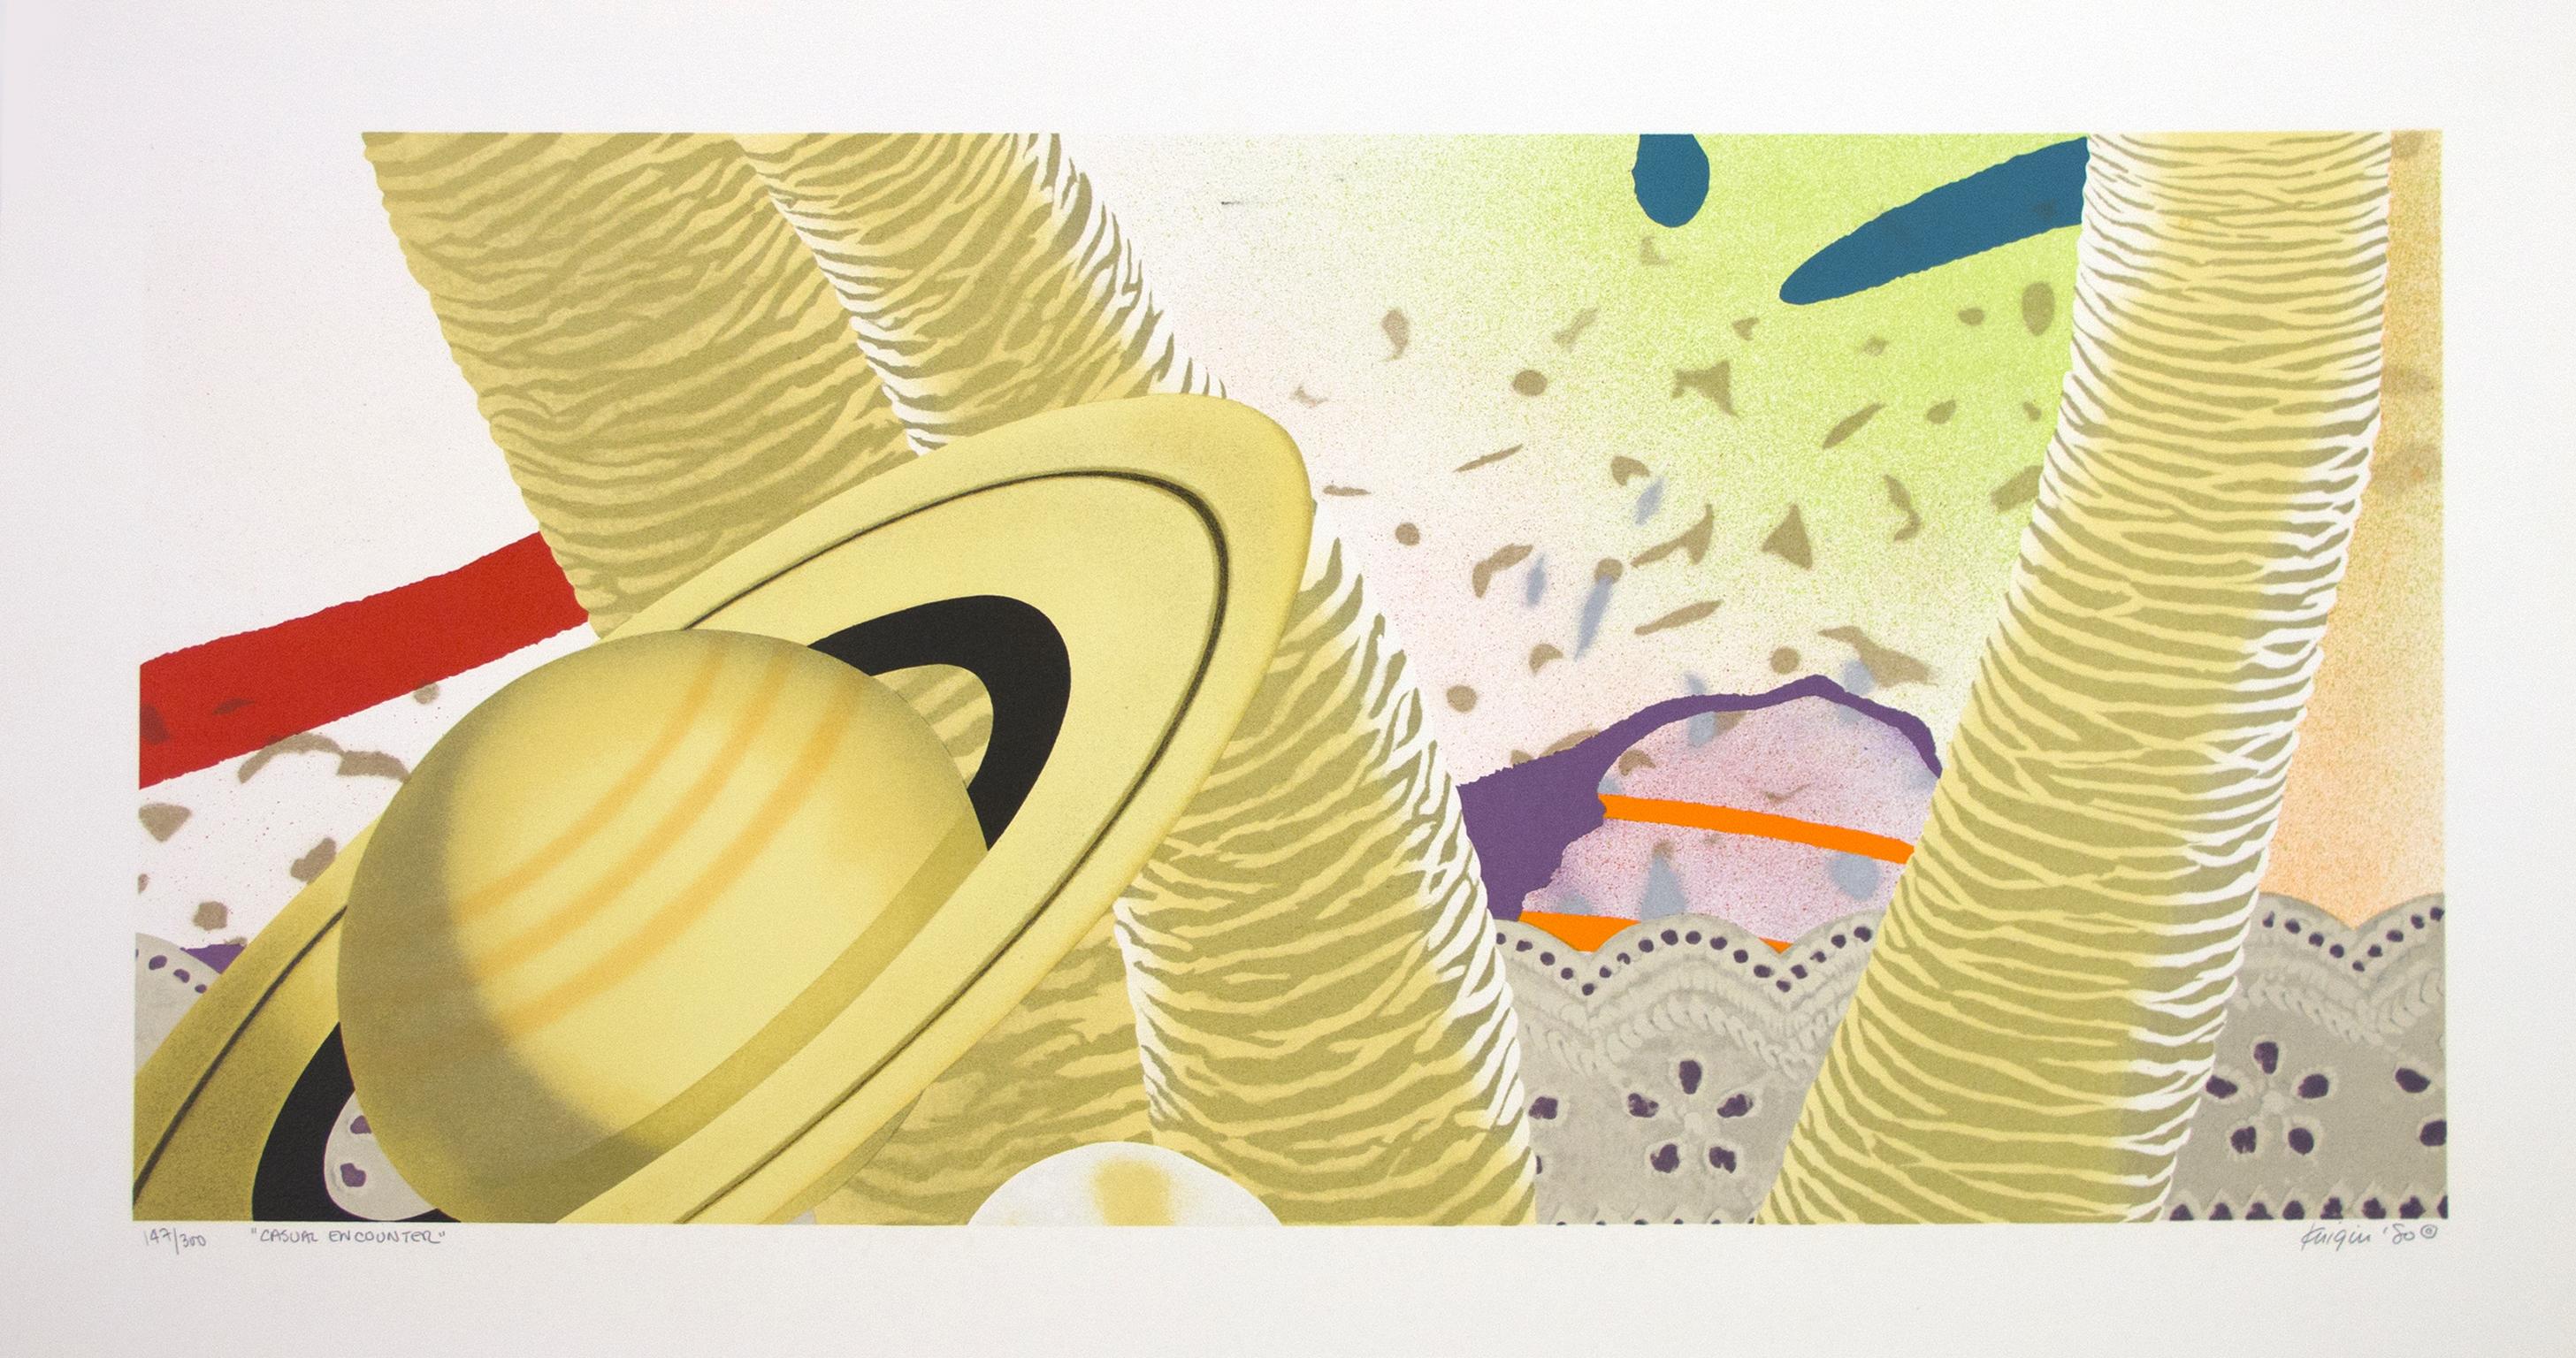 Abstract Print Michael Knigin - «sual Encounter », lithographie originale signée de la galaxie abstraite brillante, amusante et vibrante